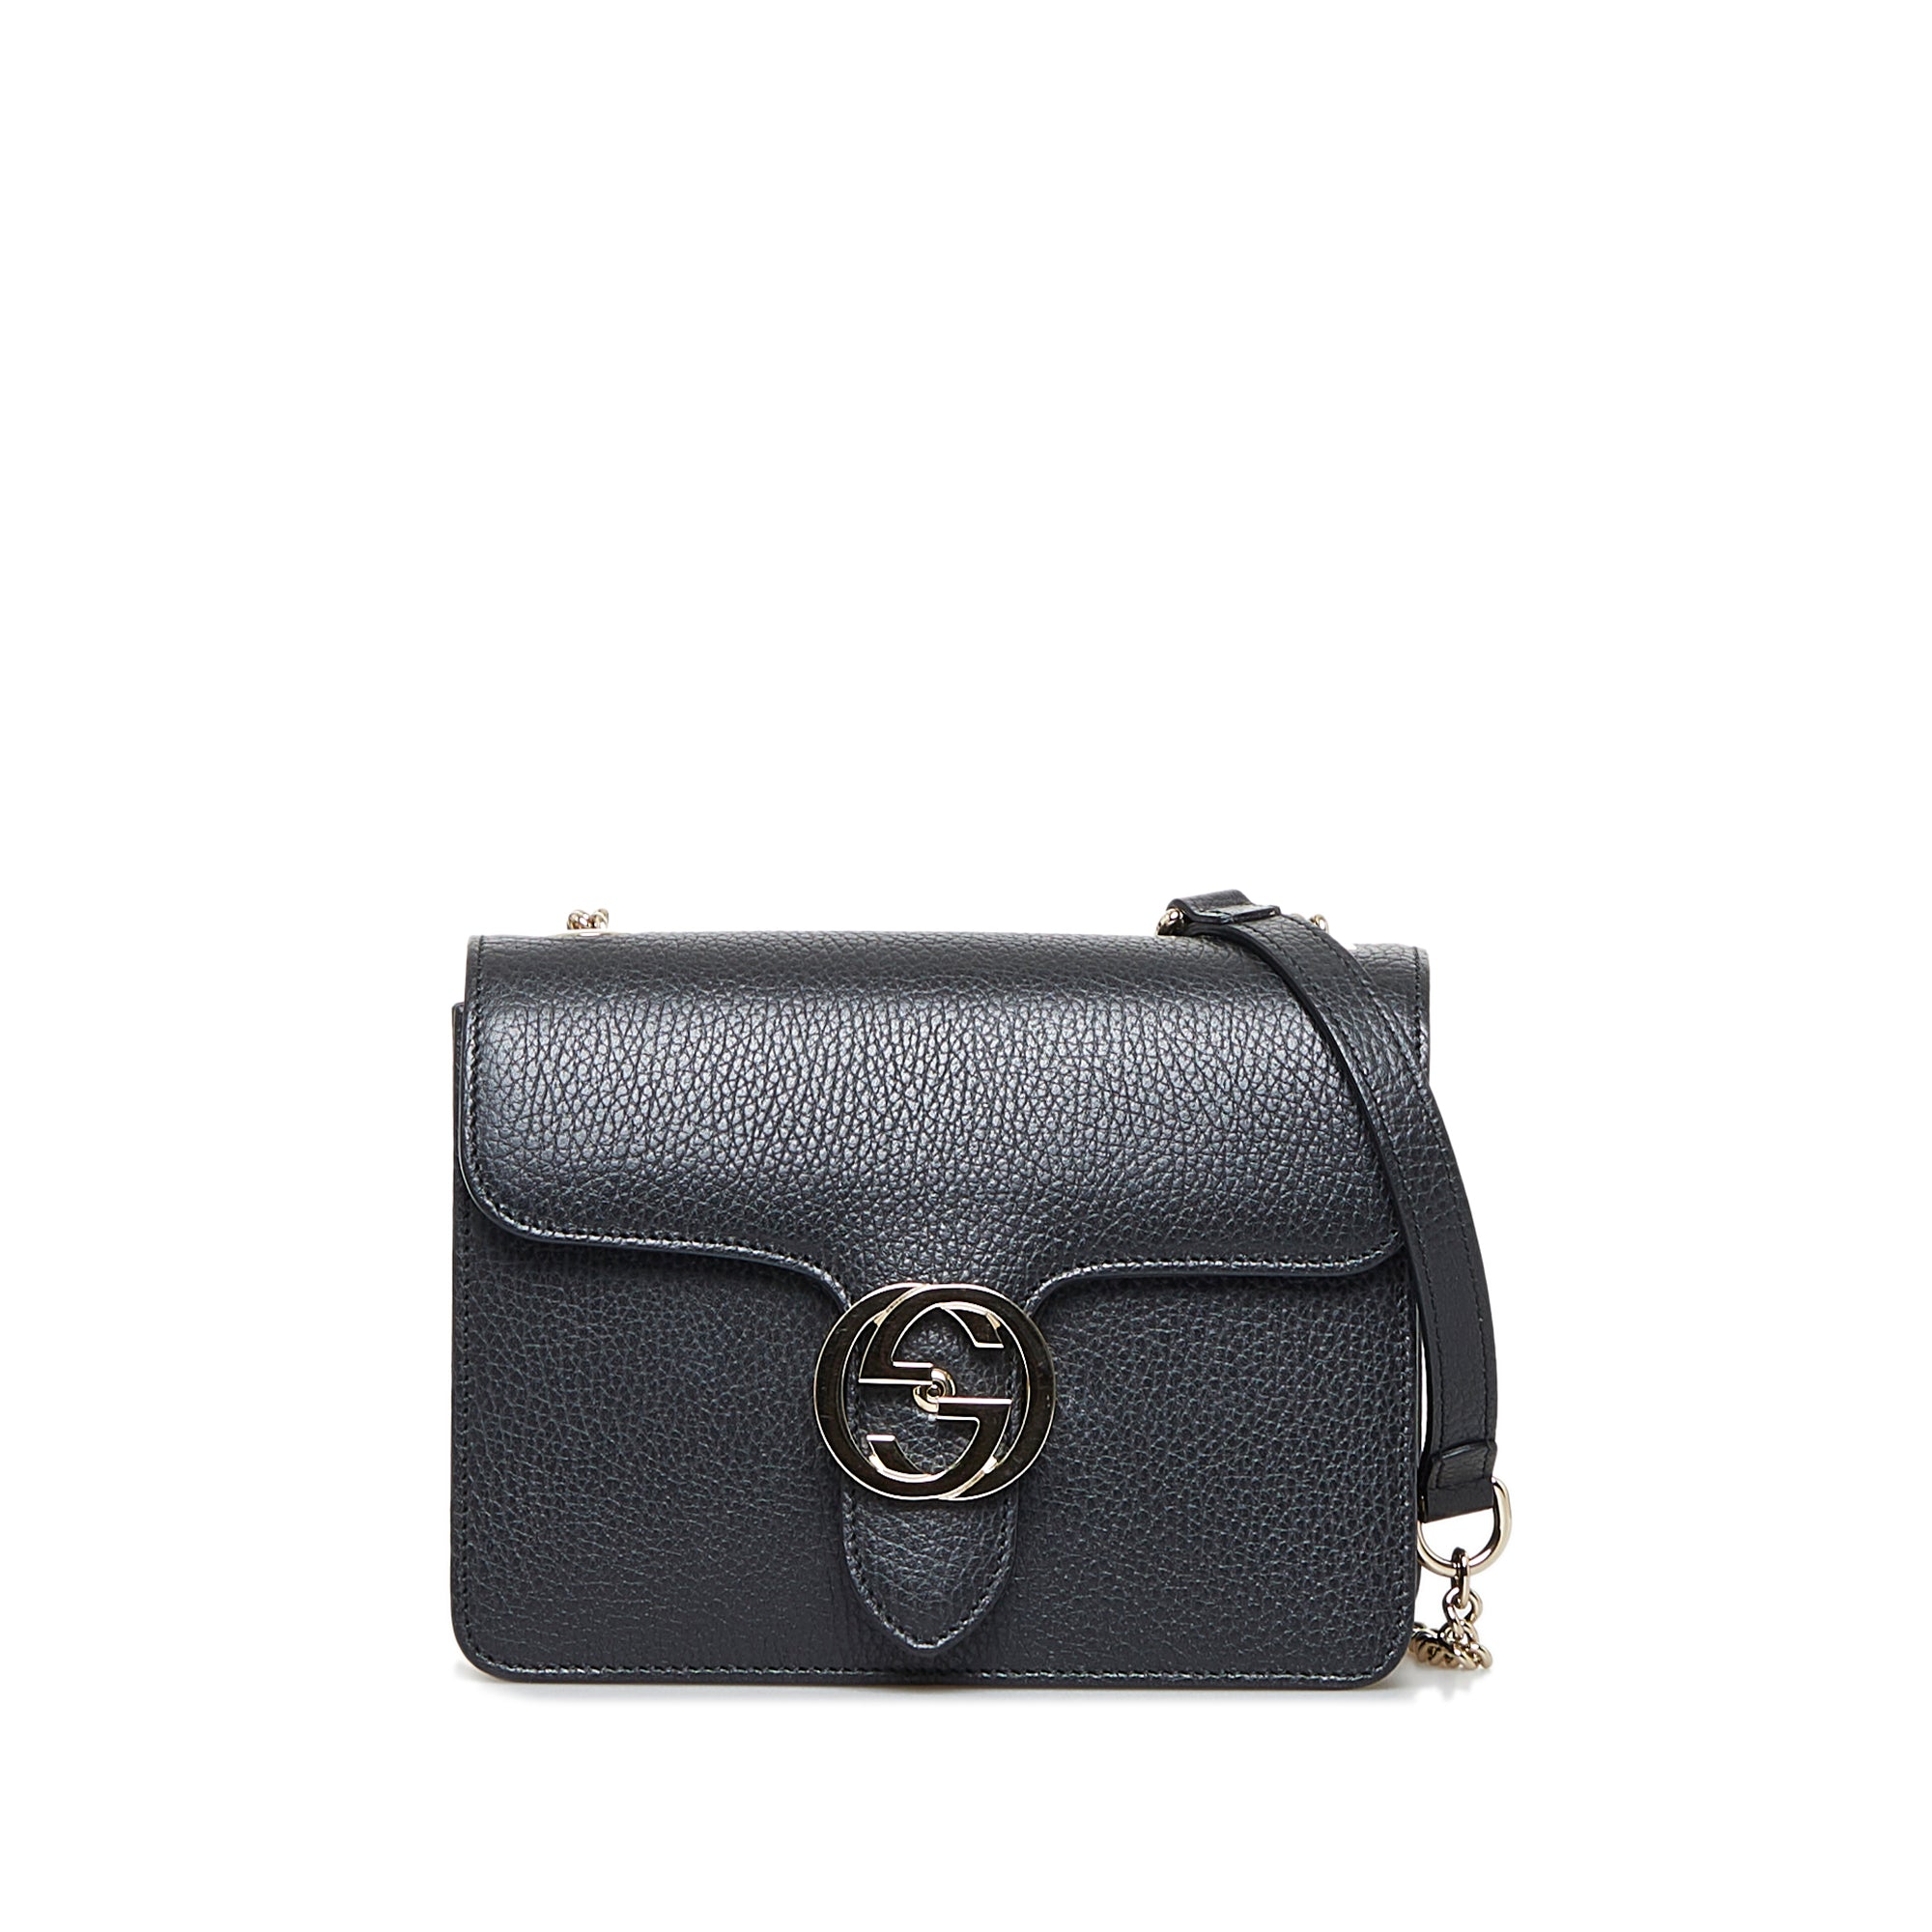 Gucci+Interlocking+G+Shoulder+Bag+Small+Dark+Blue+Leather for sale